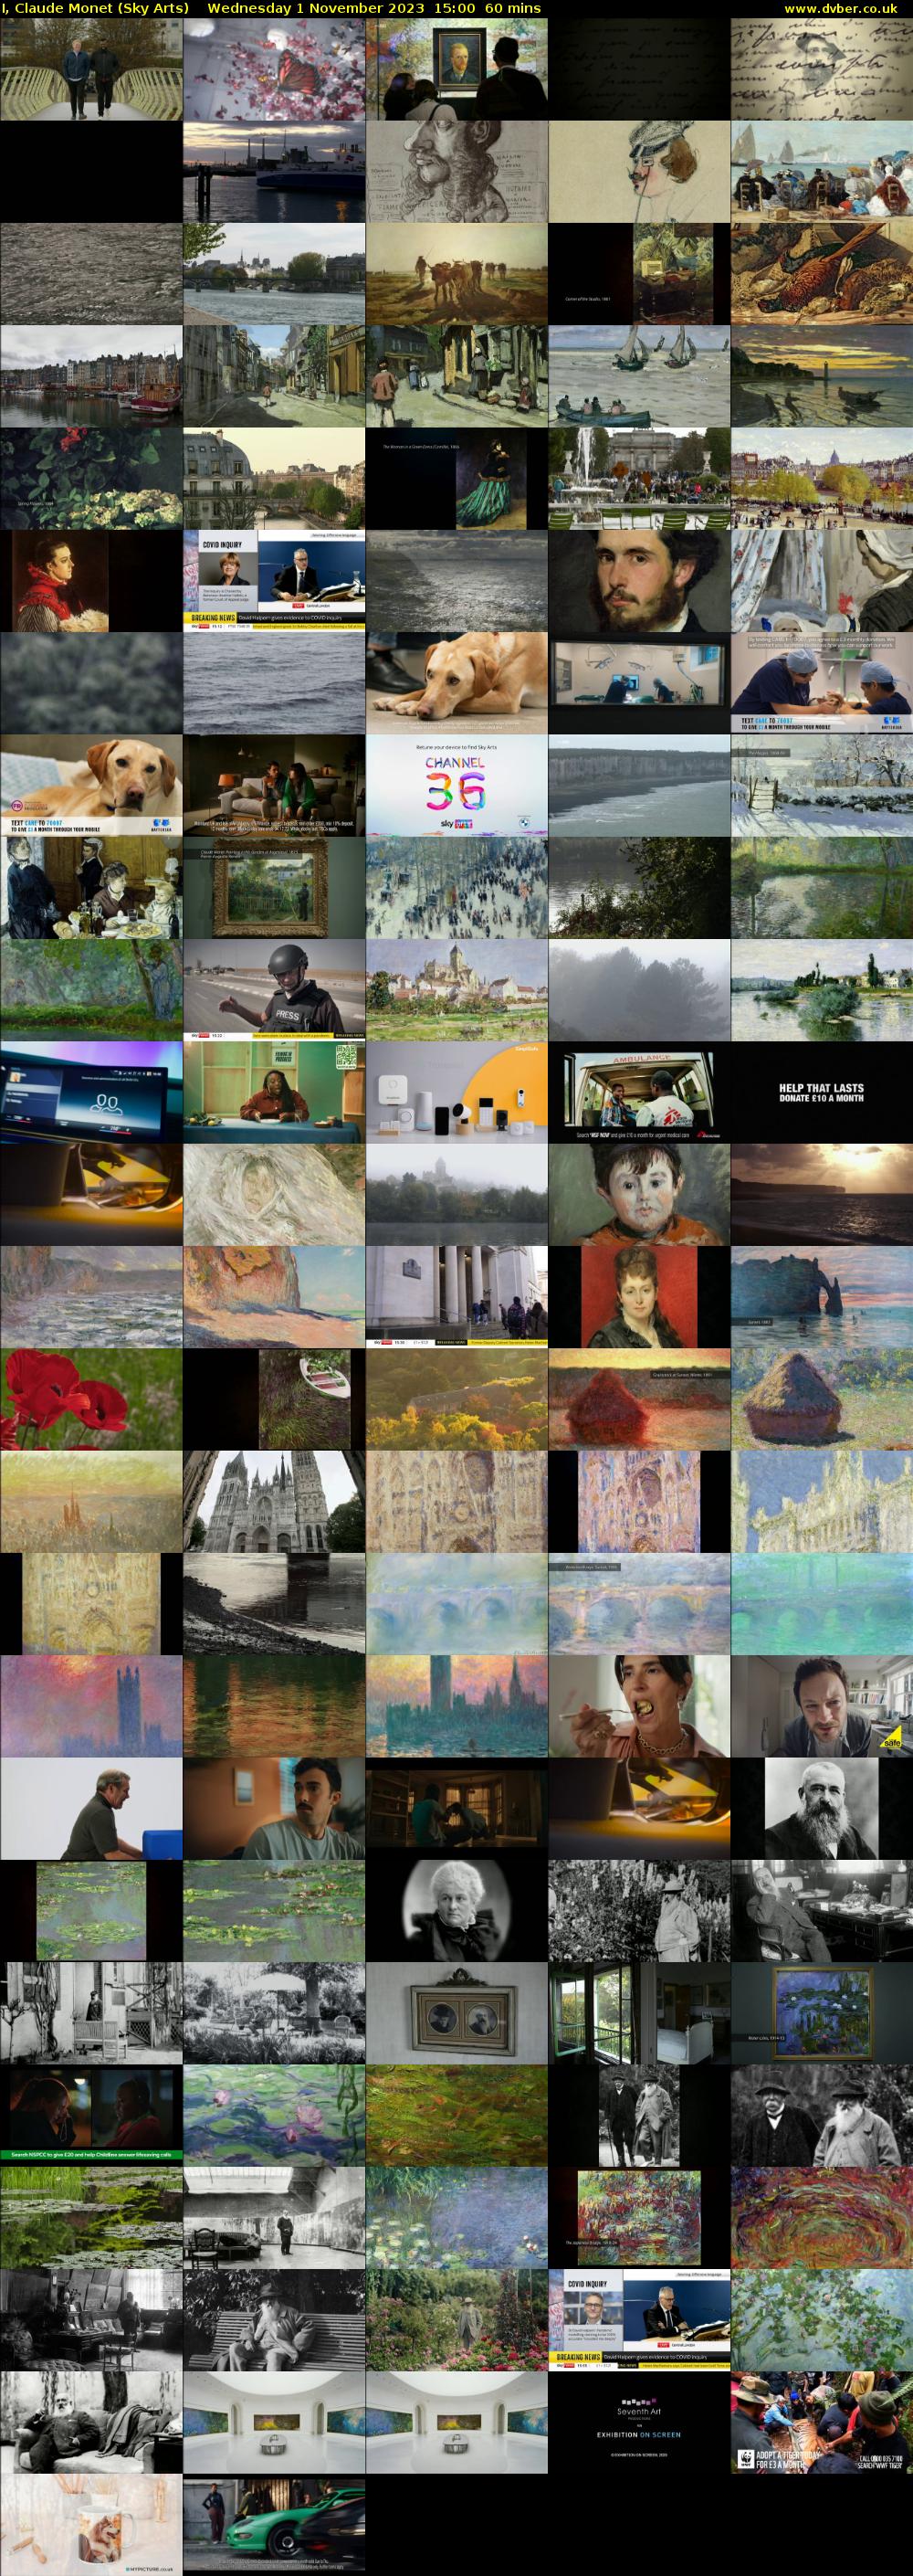 I, Claude Monet (Sky Arts) Wednesday 1 November 2023 15:00 - 16:00